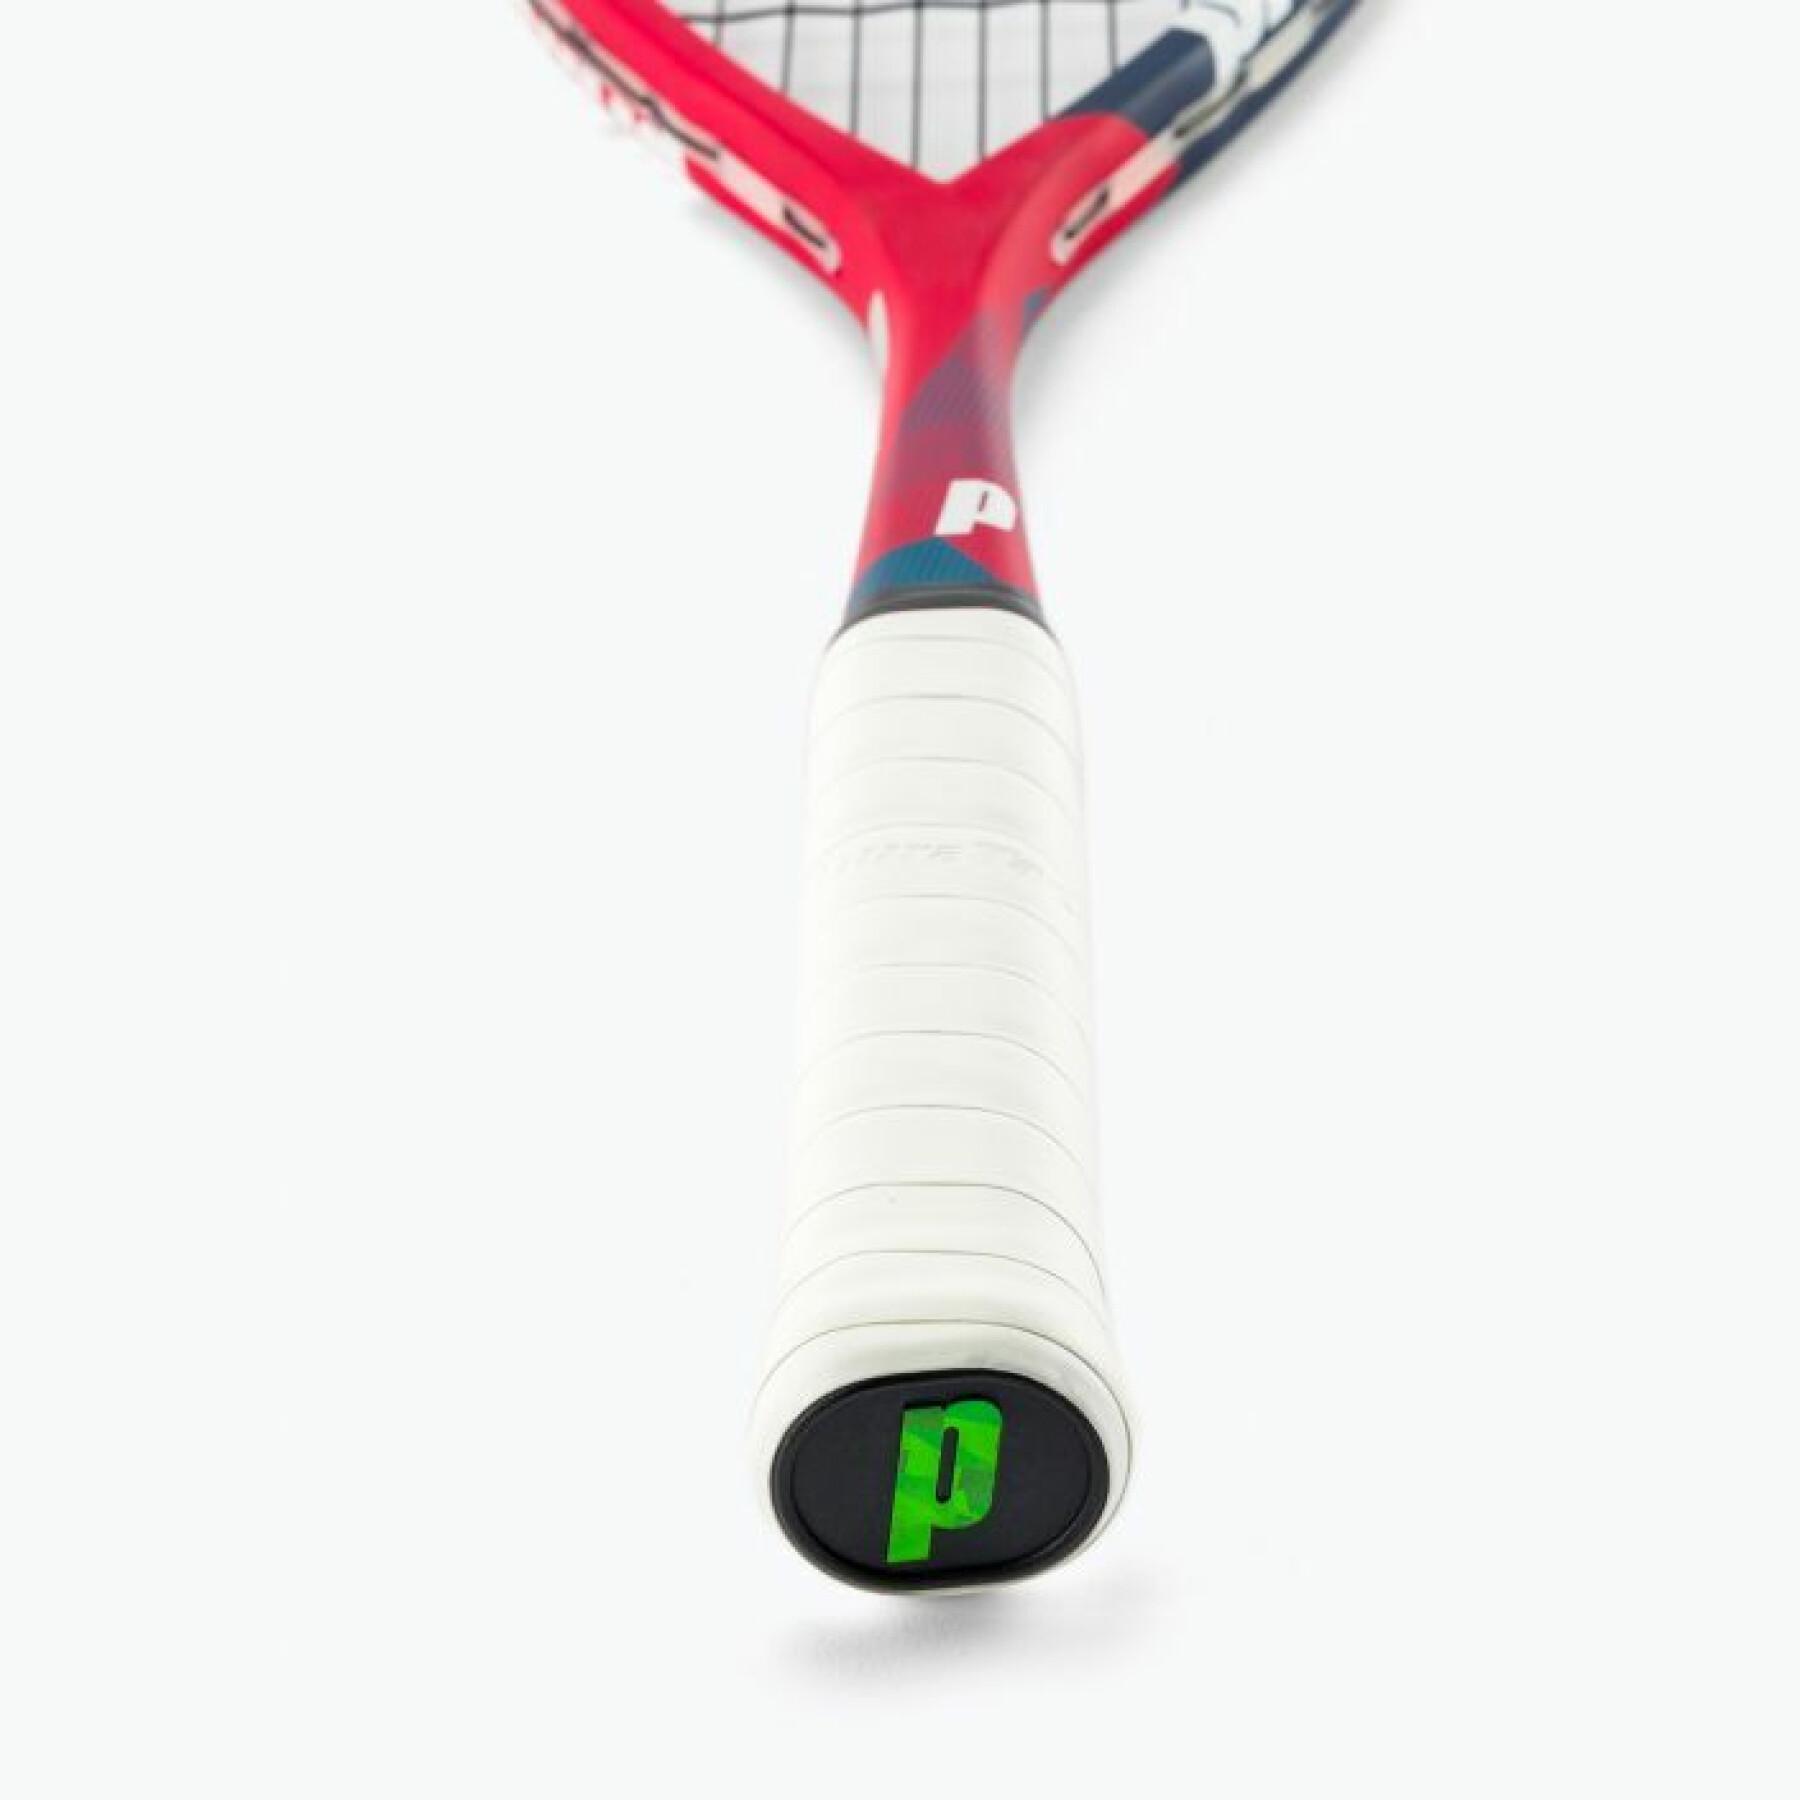 Squash racket Prince Thunder